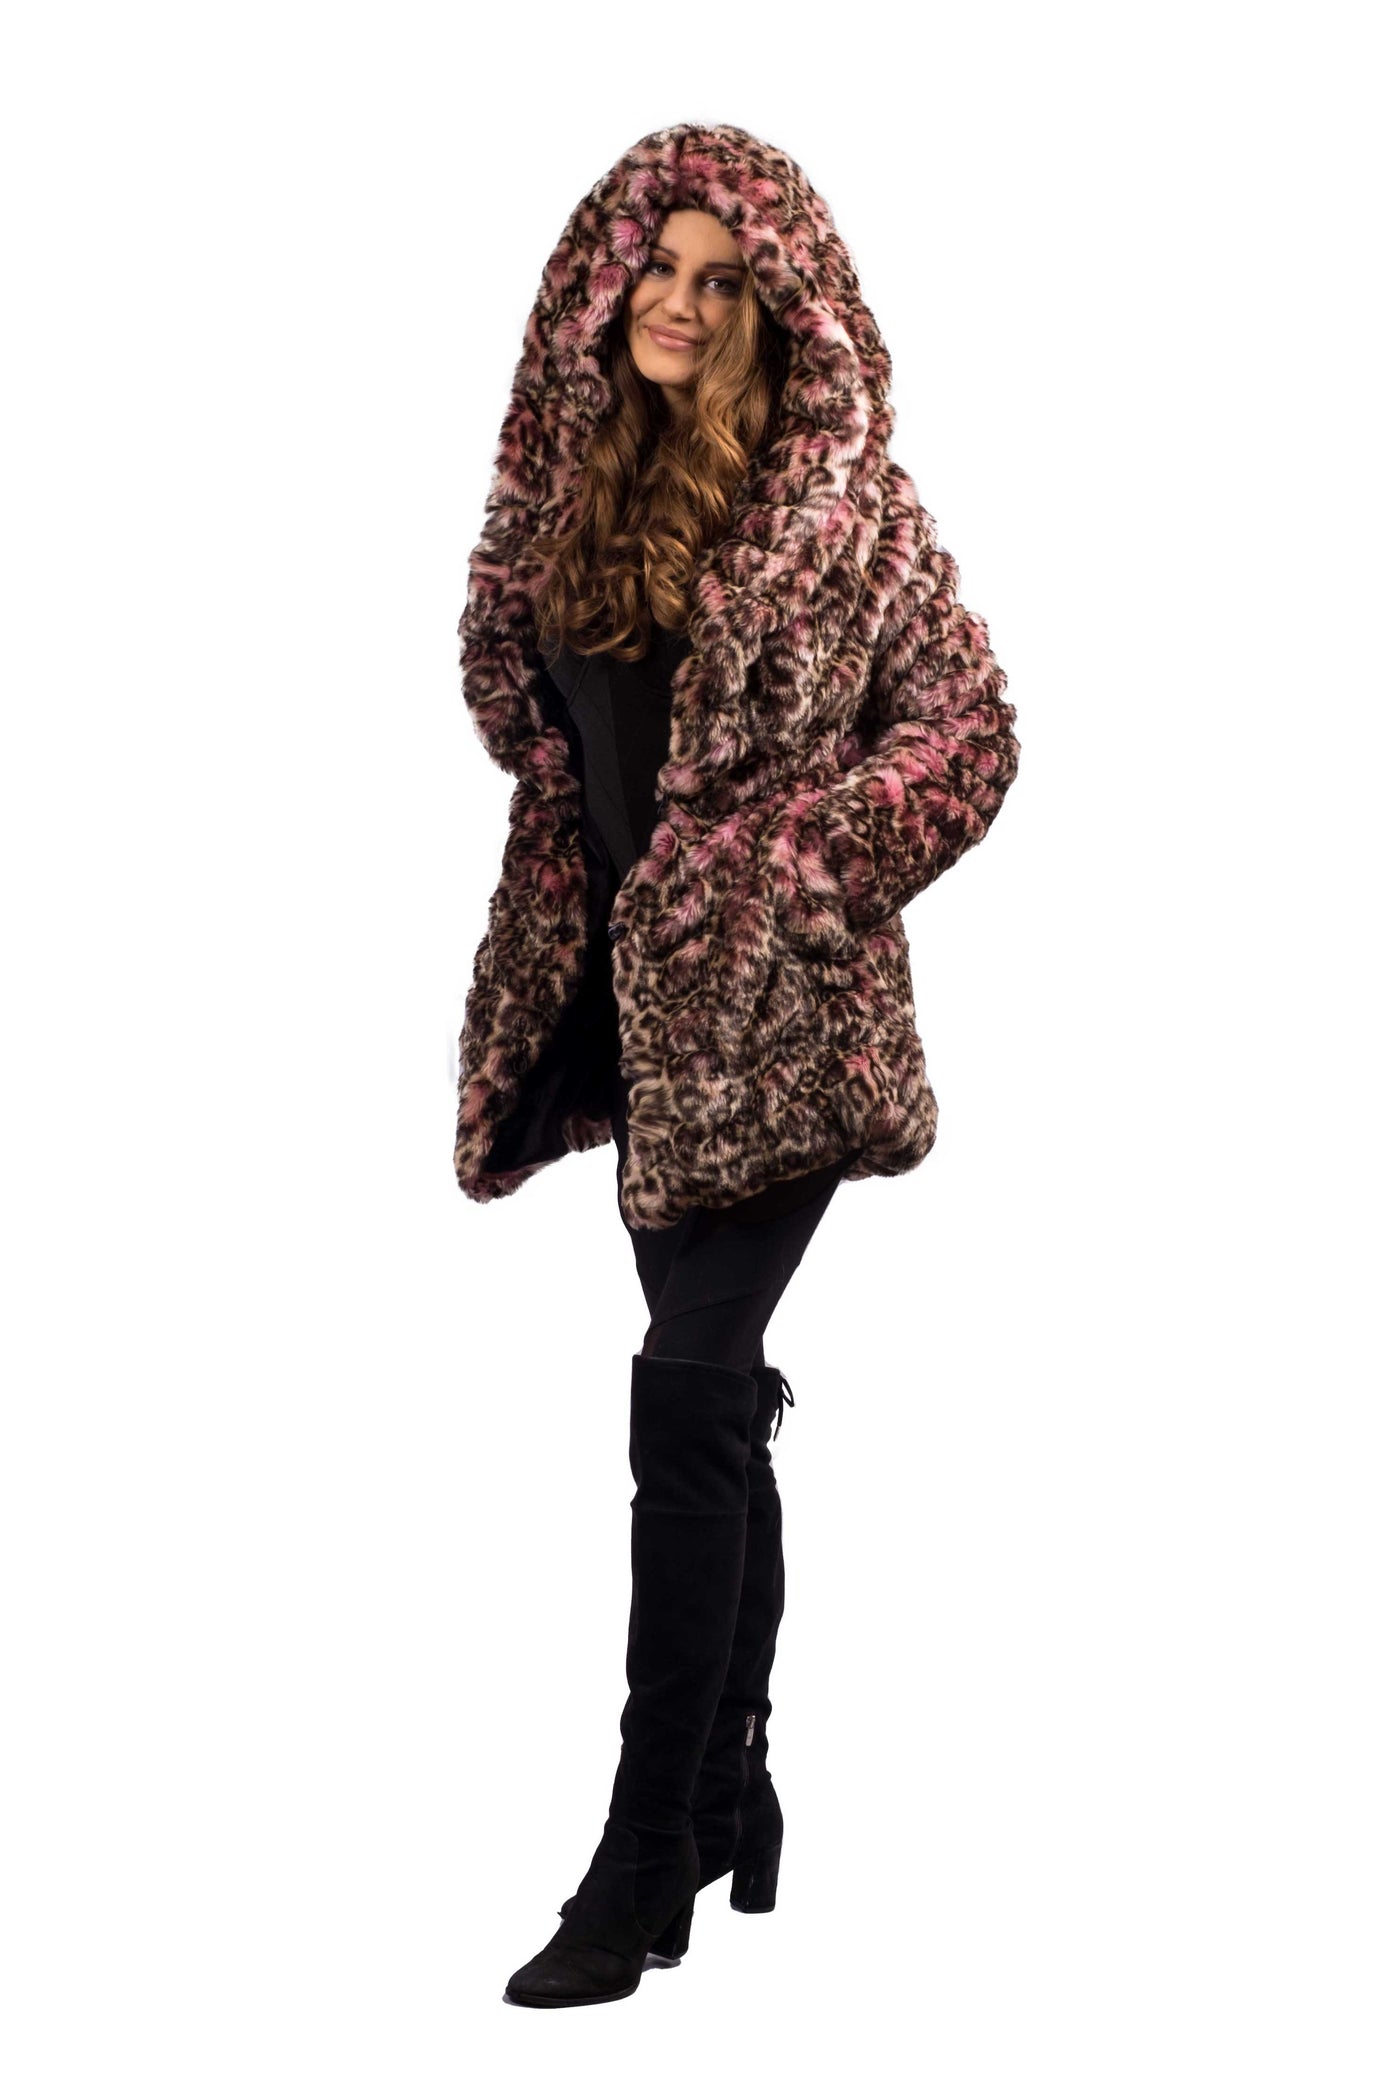 Women's Short Desert Warrior Coat in "Pink Cheetah" Chinchilla